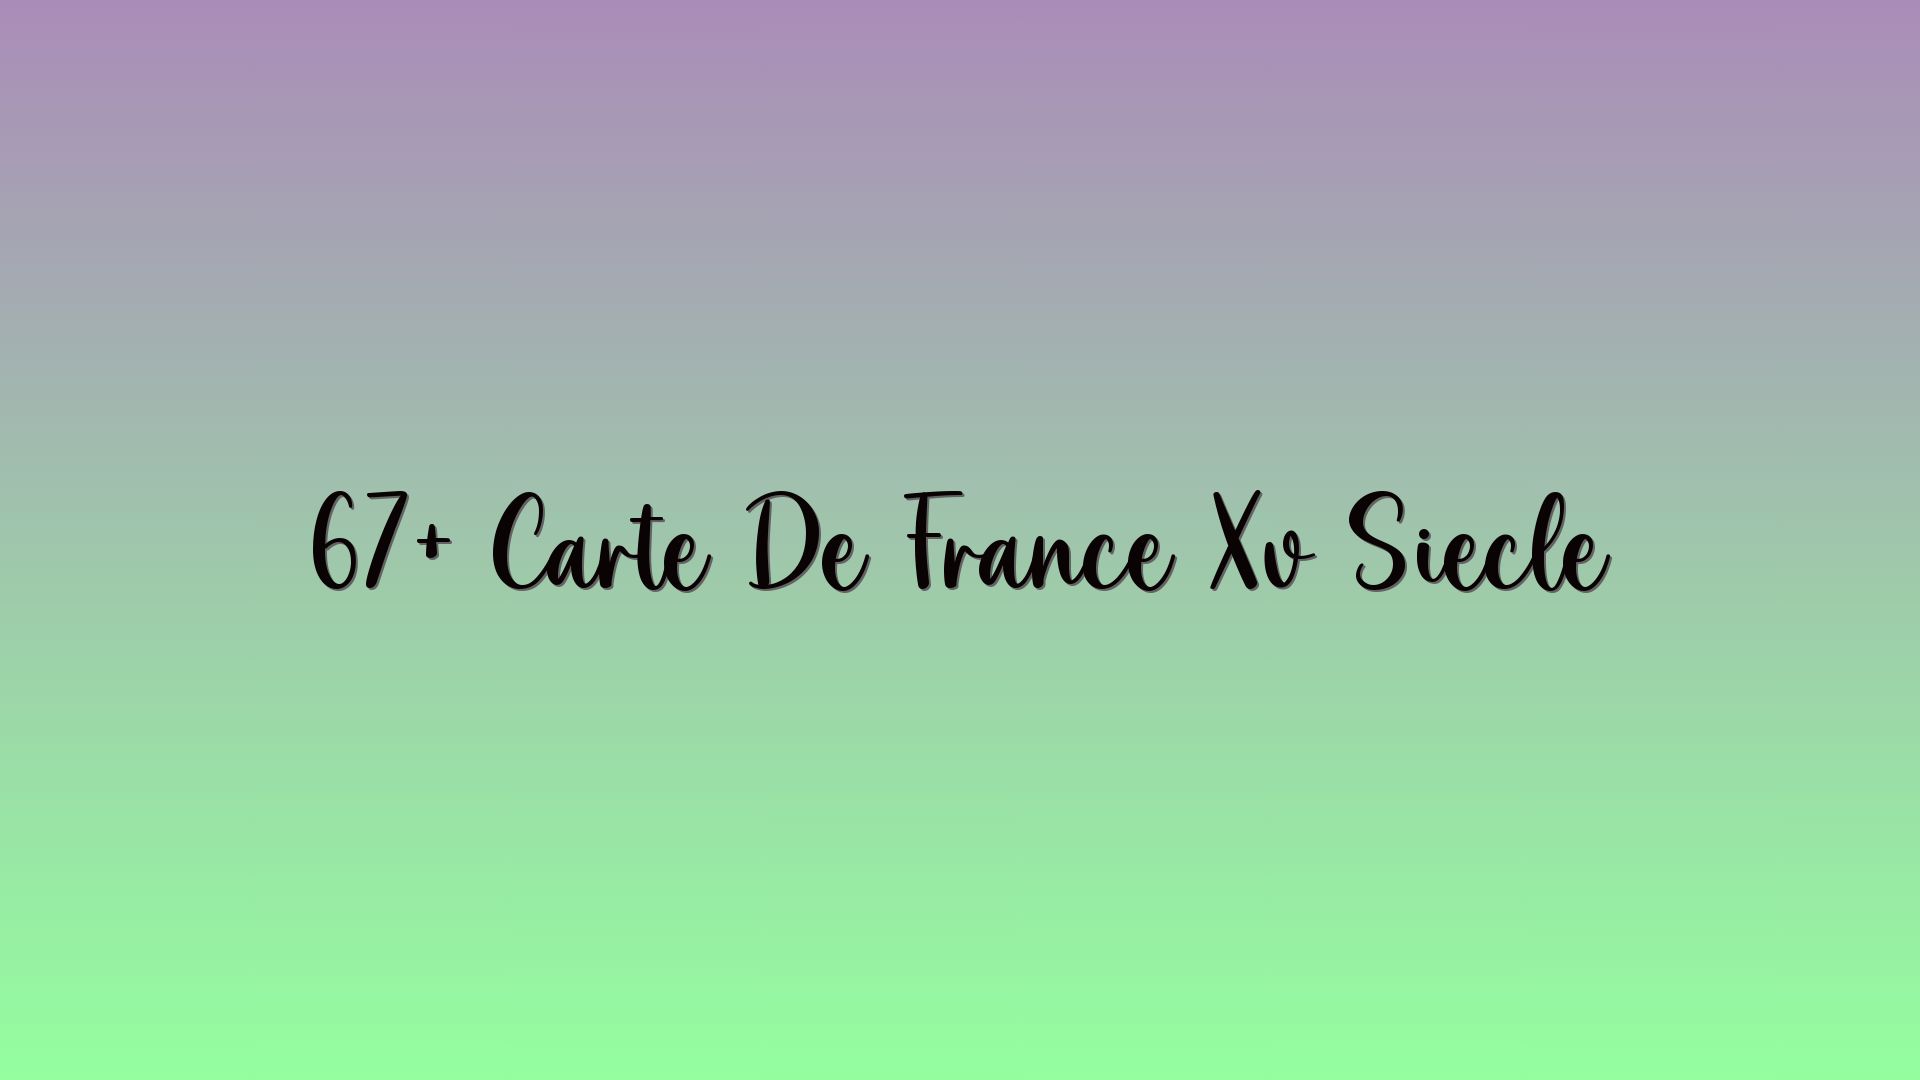 67+ Carte De France Xv Siecle